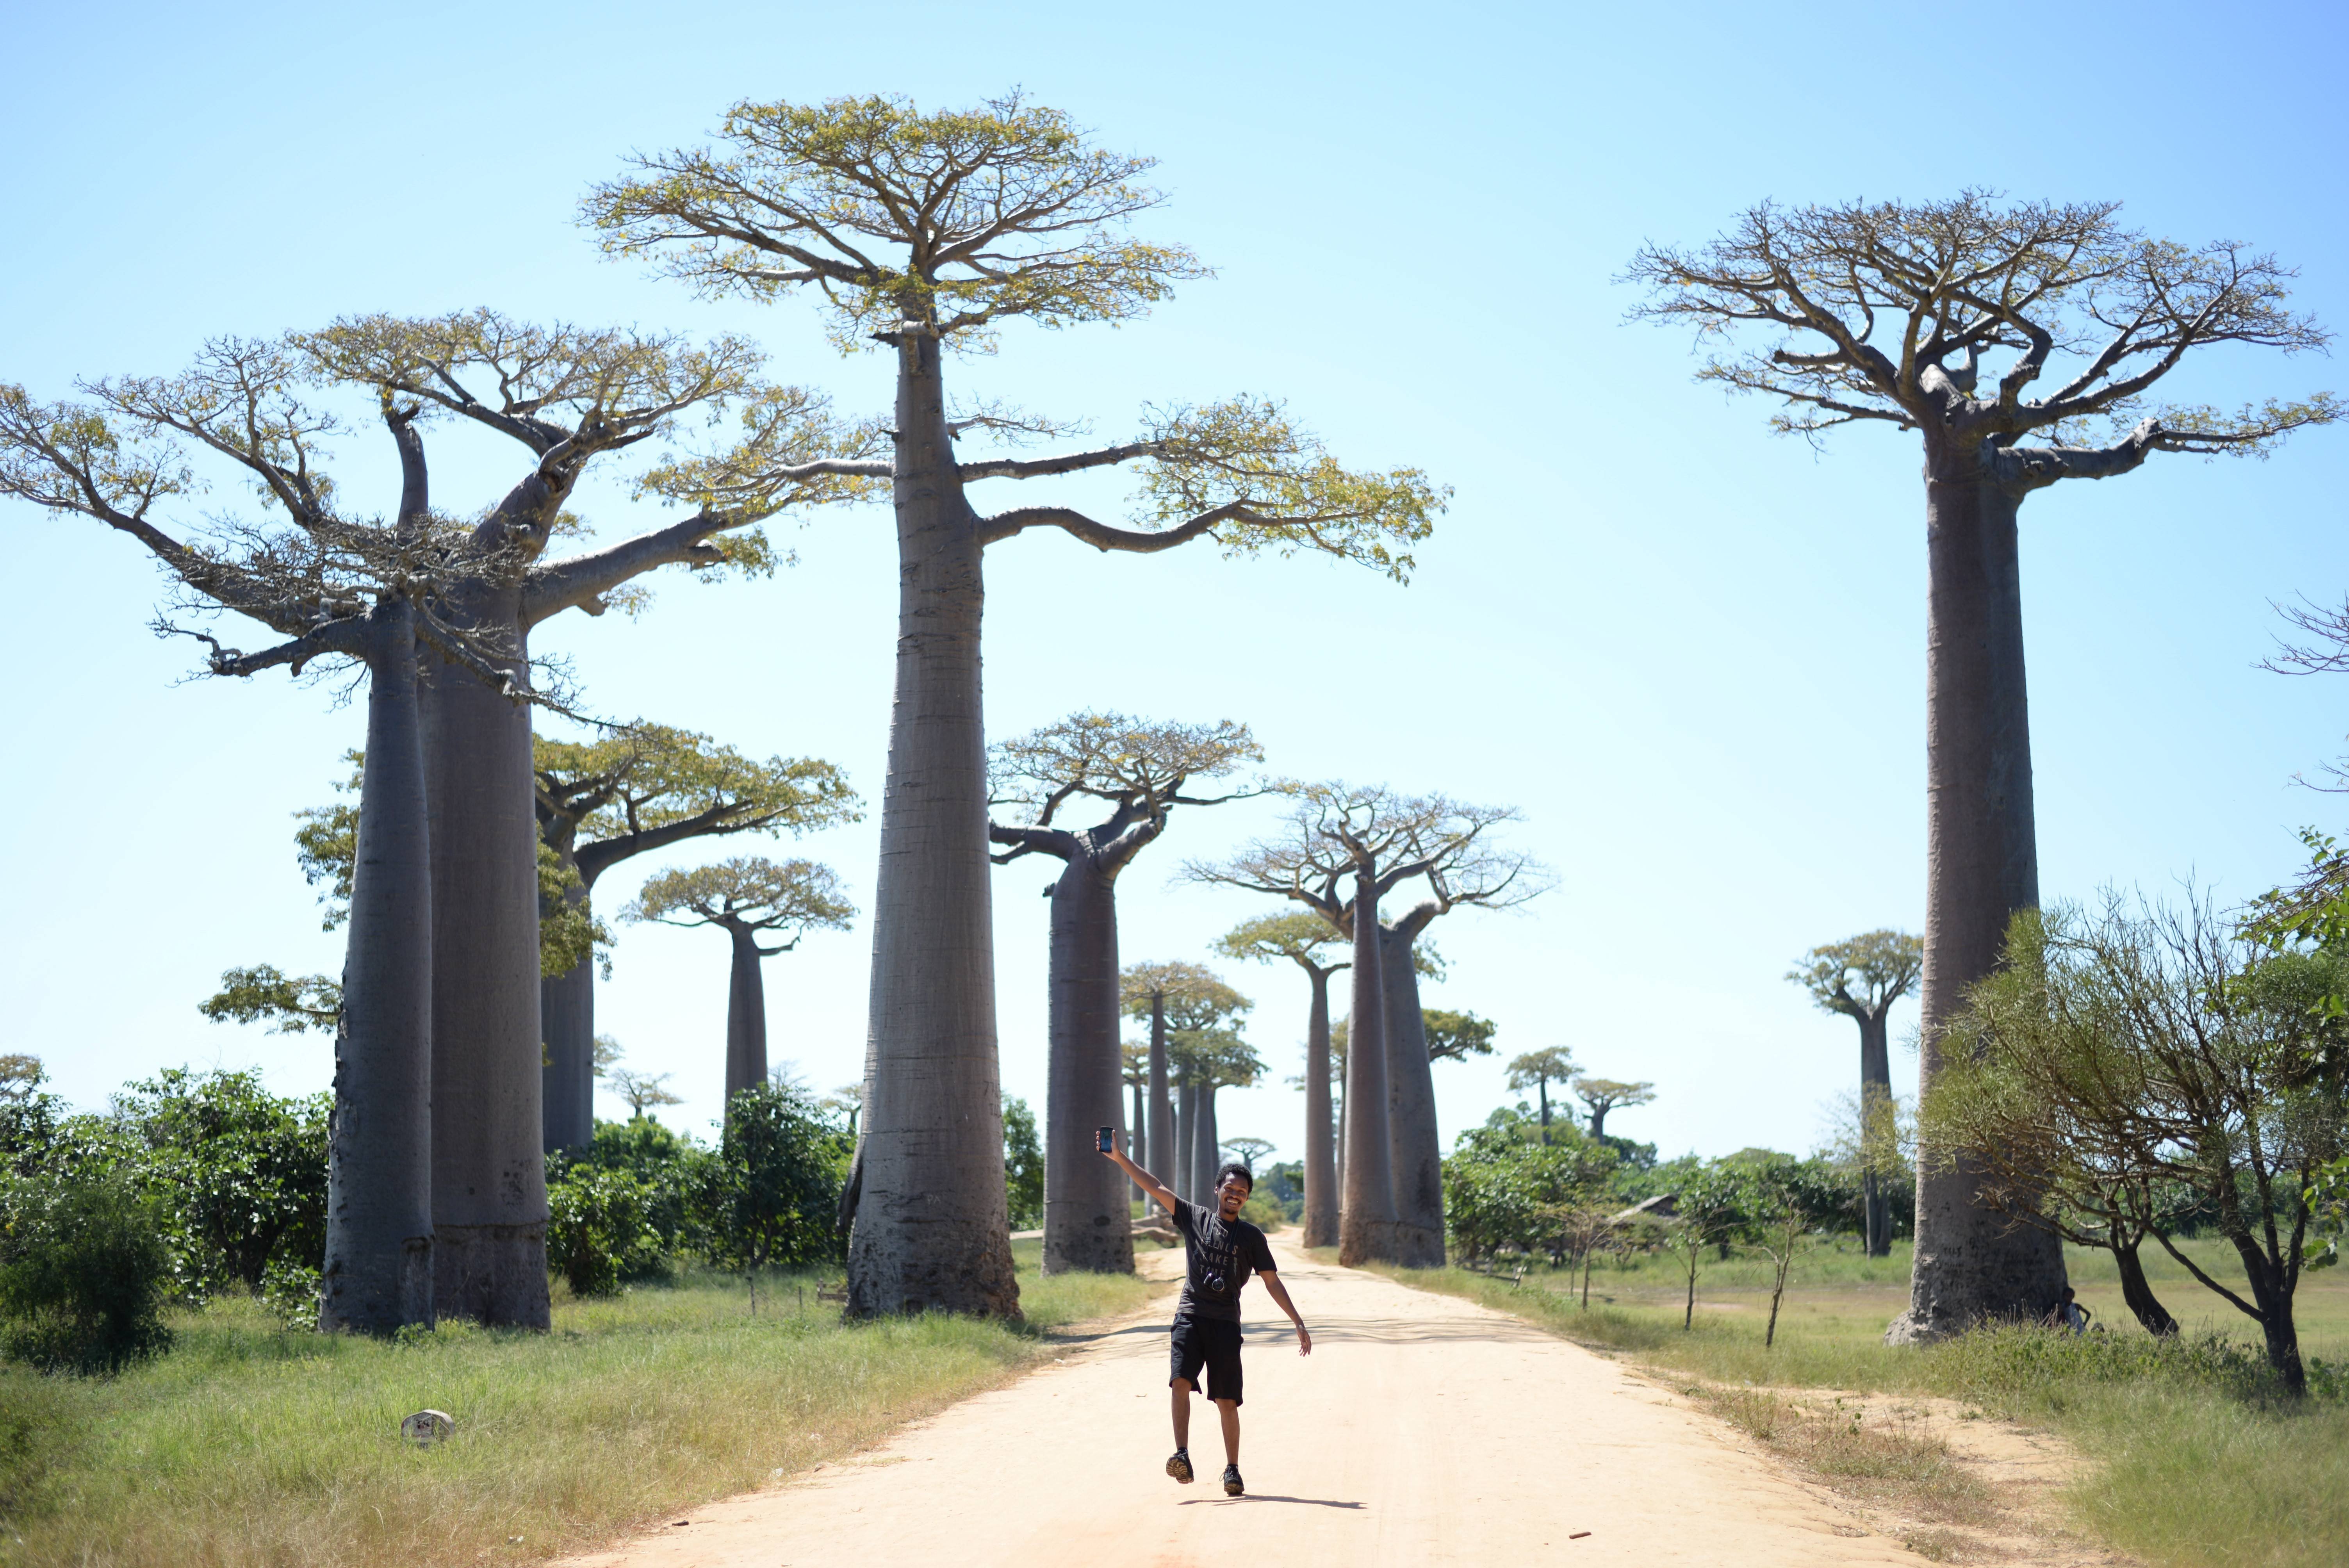 Ба баб. Баобаб дерево. Самое большое дерево в мире баобаб. Мадагаскарский баобаб. Мадагаскарский баобаб дерево.